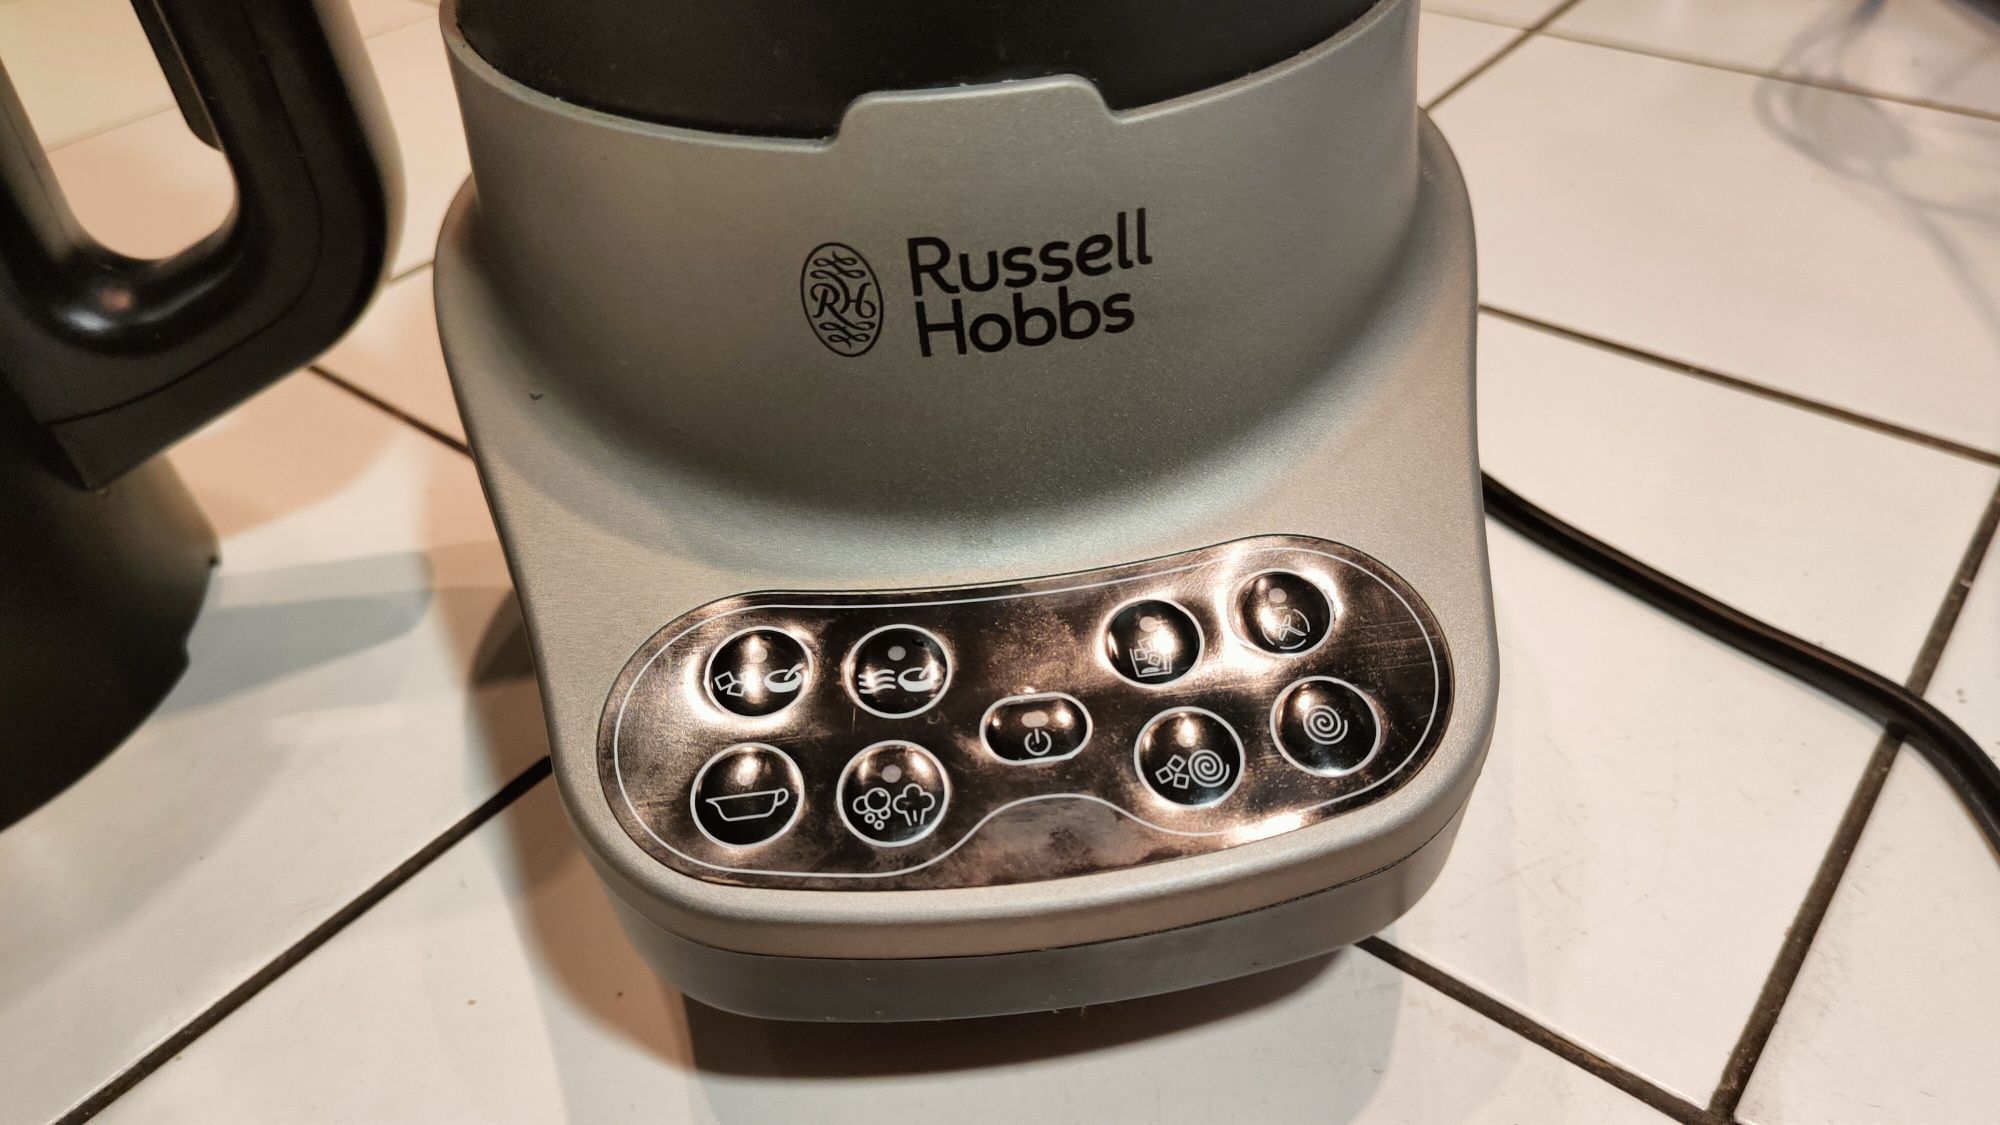 Blender Russell Hobss 1 , 75 litra  1200w